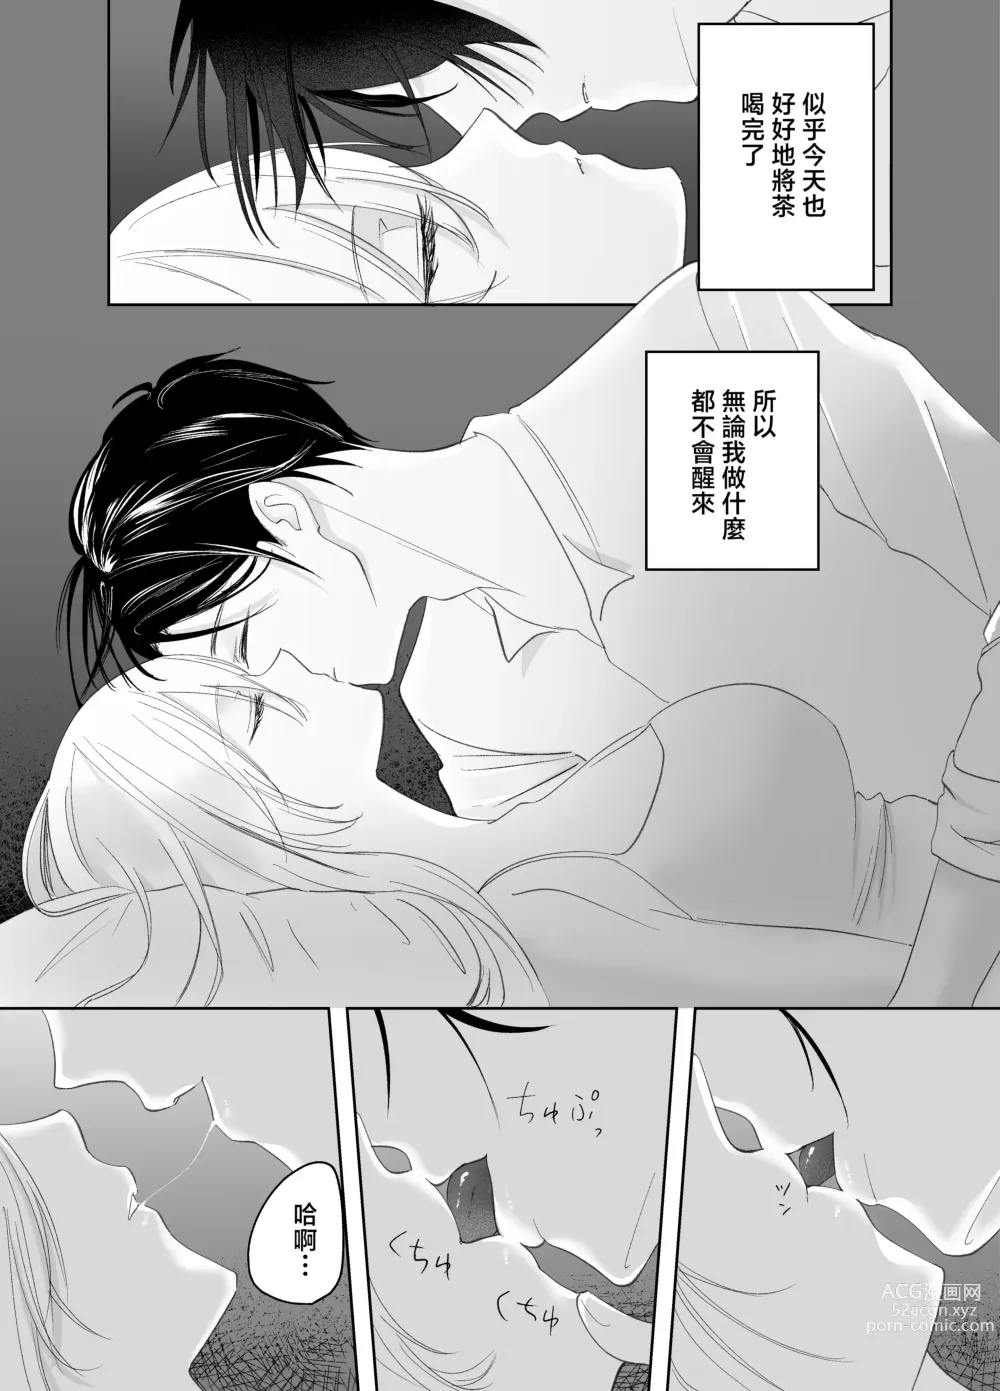 Page 7 of doujinshi 大小姐，抱歉打扰您就寝